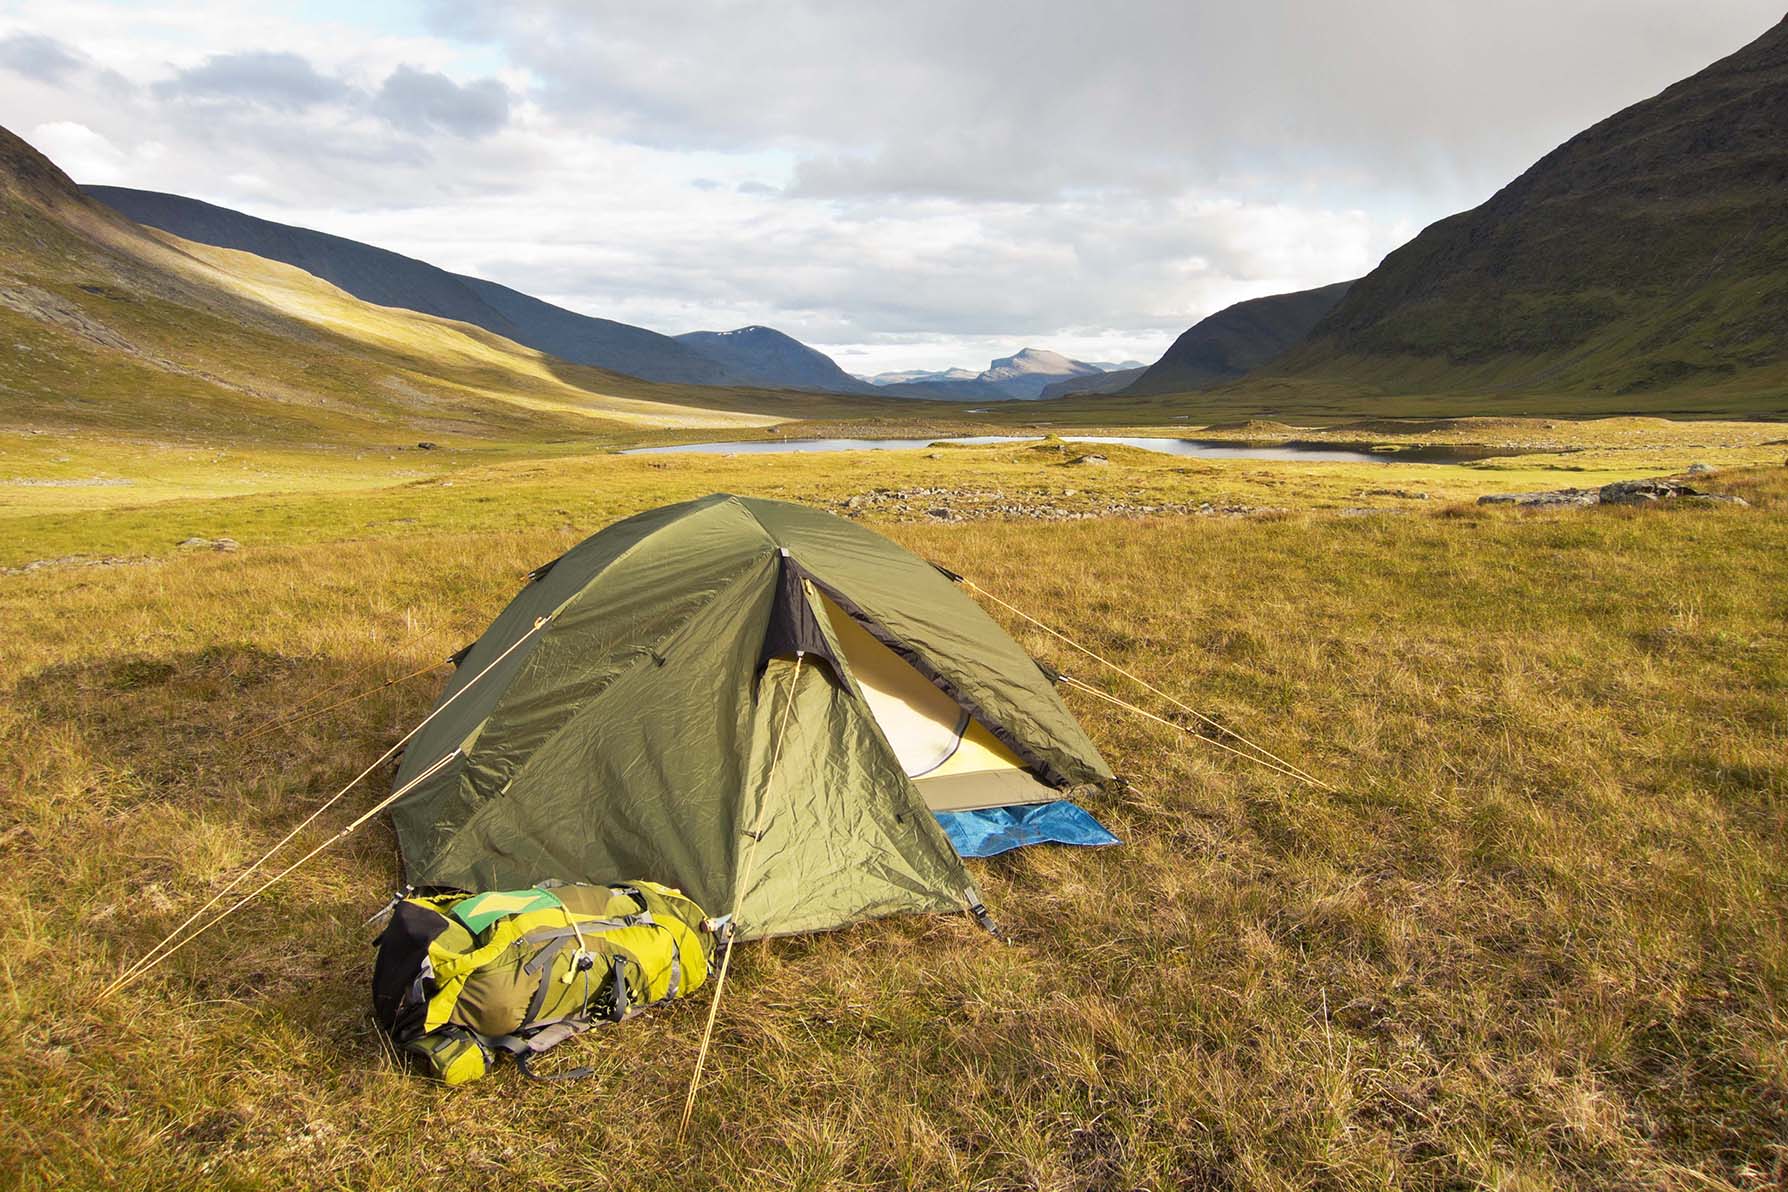 campsite on open plain